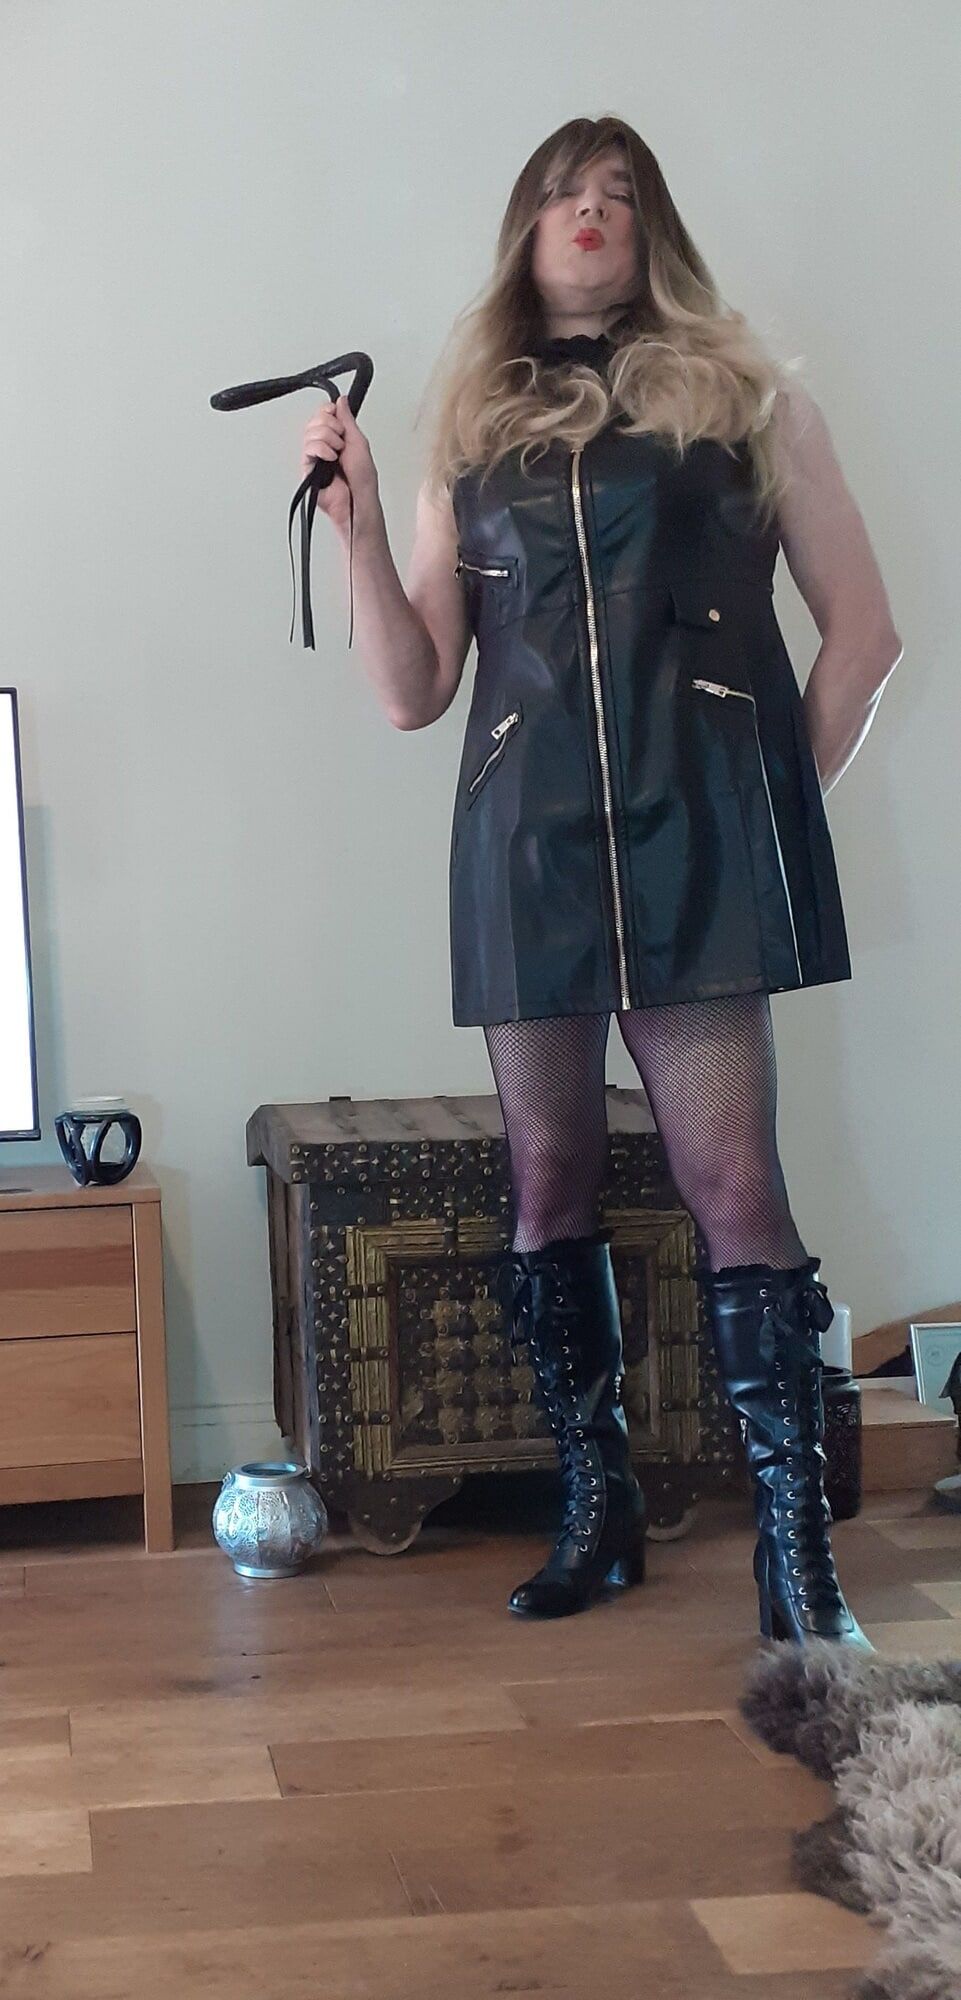 crossdressed in black leather dress #31